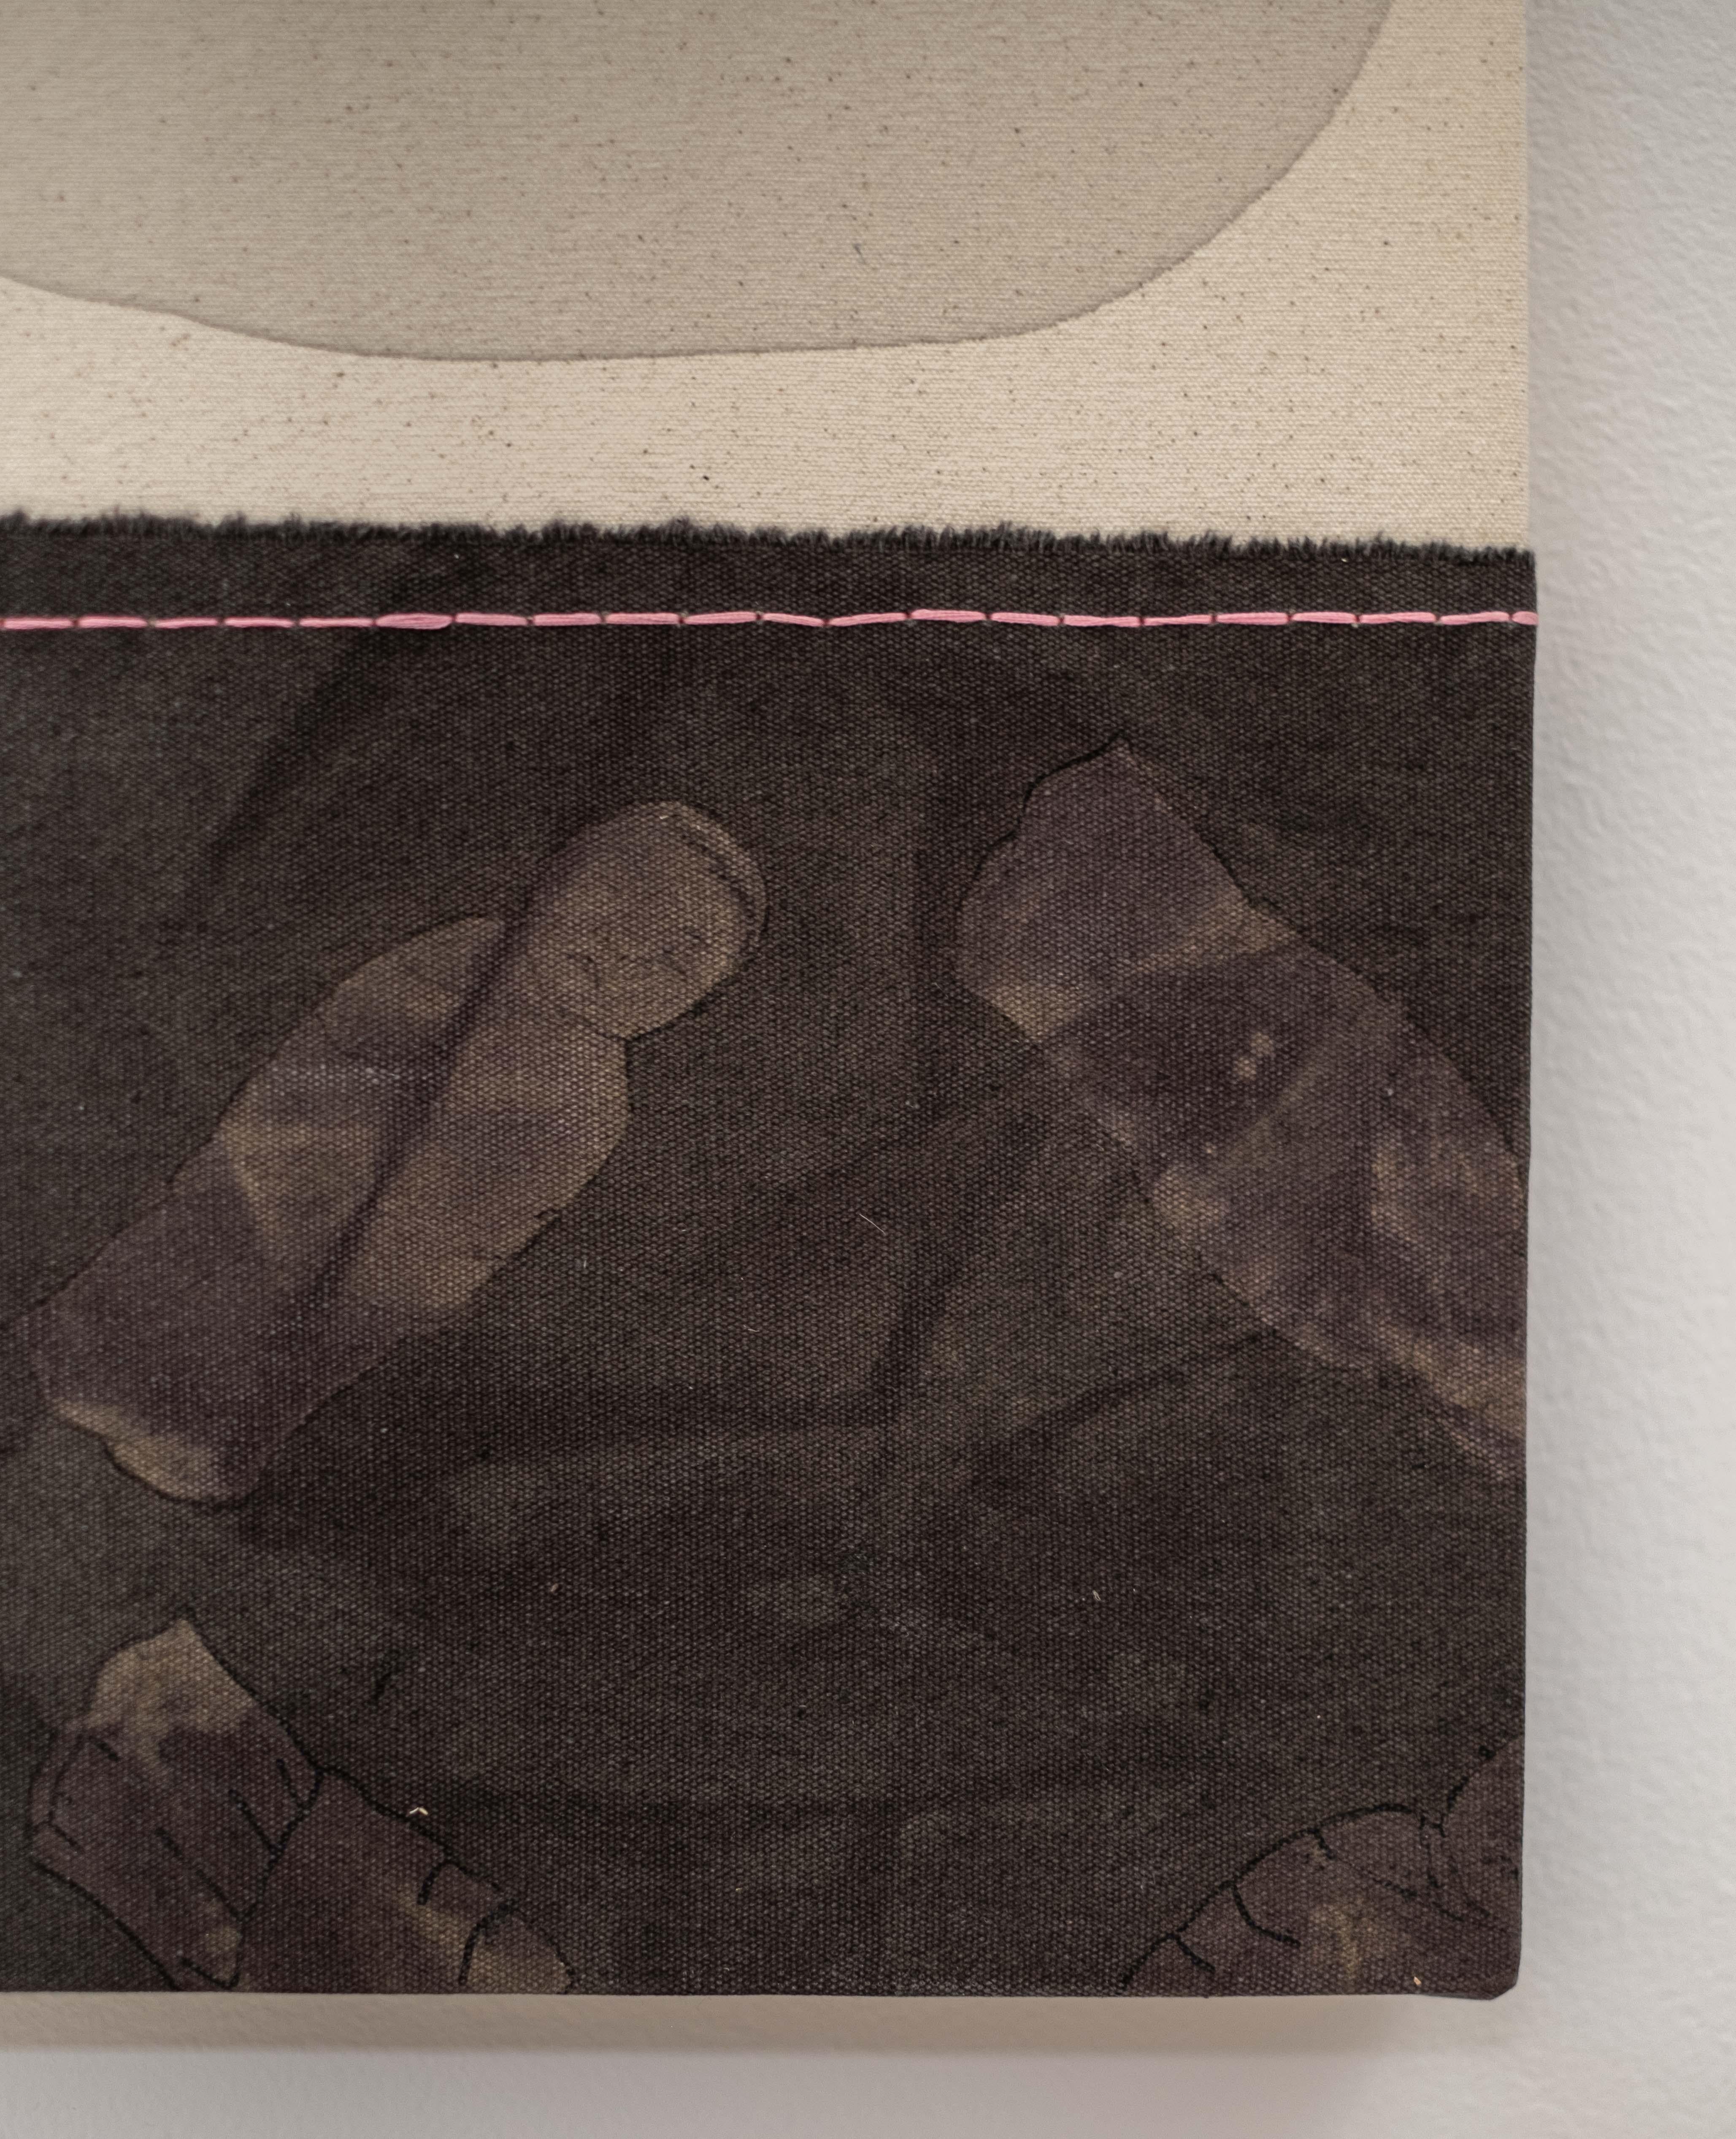 Mule mit transparentem pack und Felsen - farbenfrohes, figuratives Acryl auf Leinwand 1